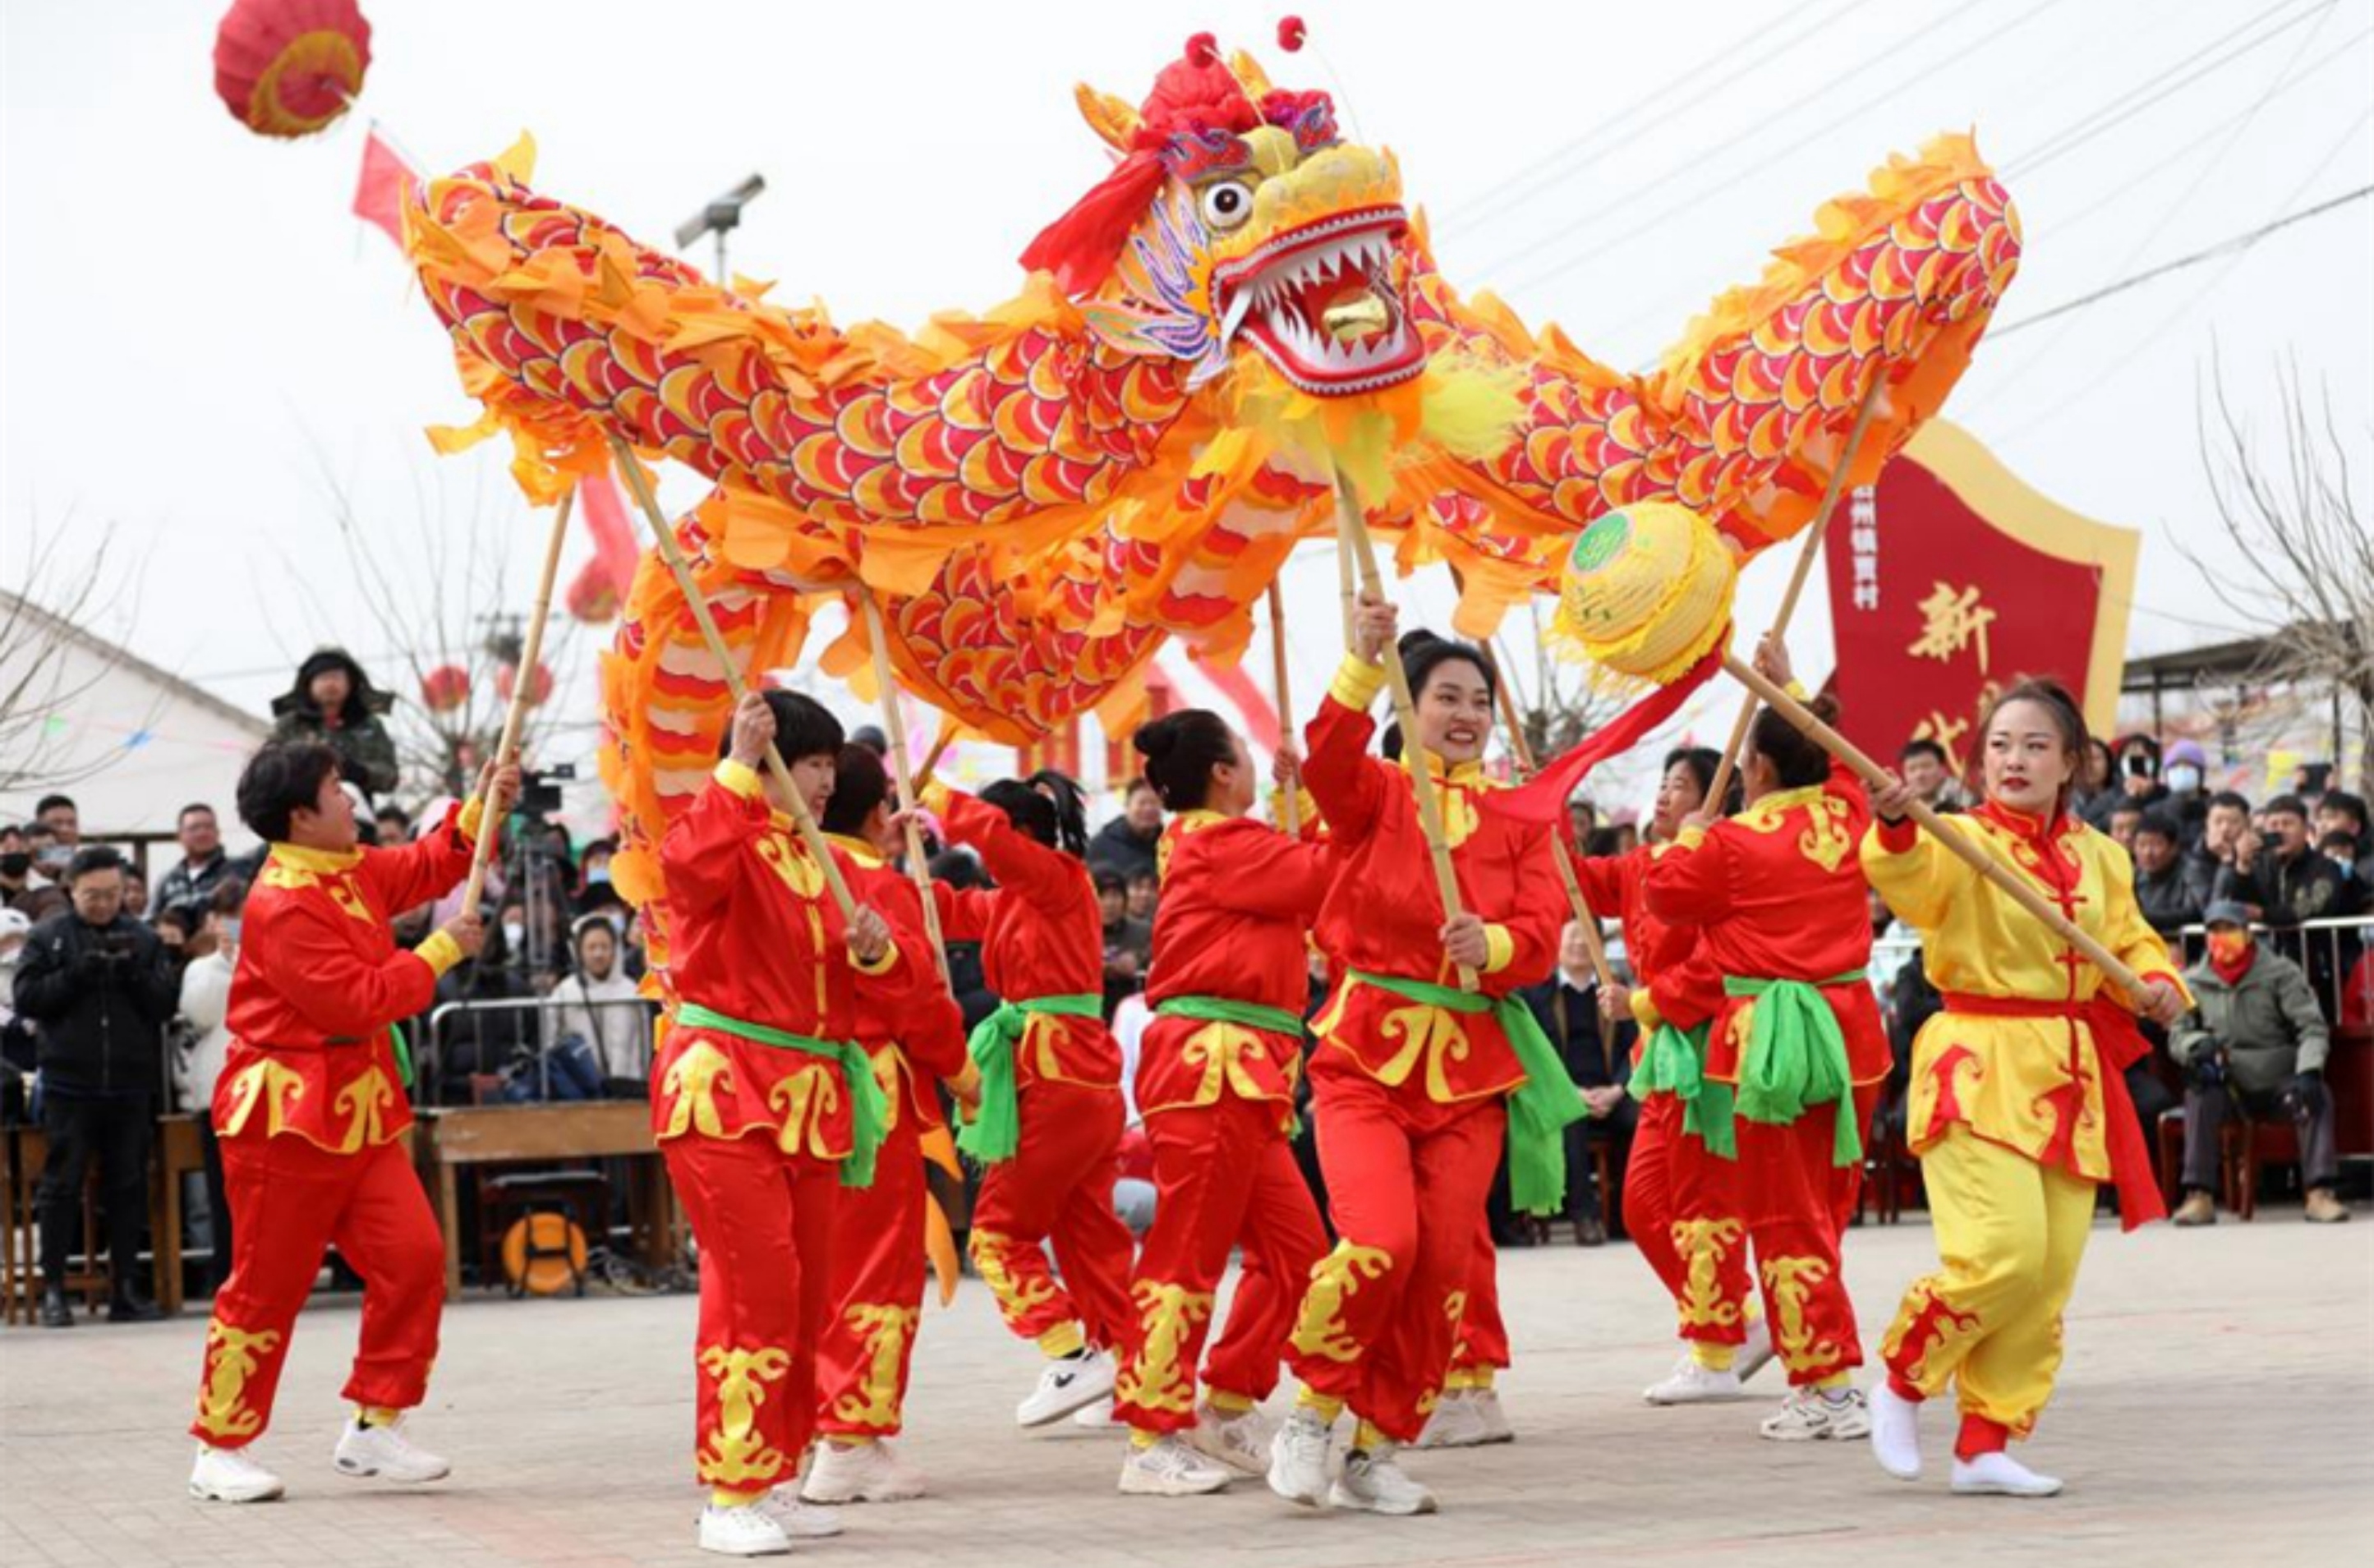 Lantern dragon dance performed to greet upcoming Lantern Festival across China